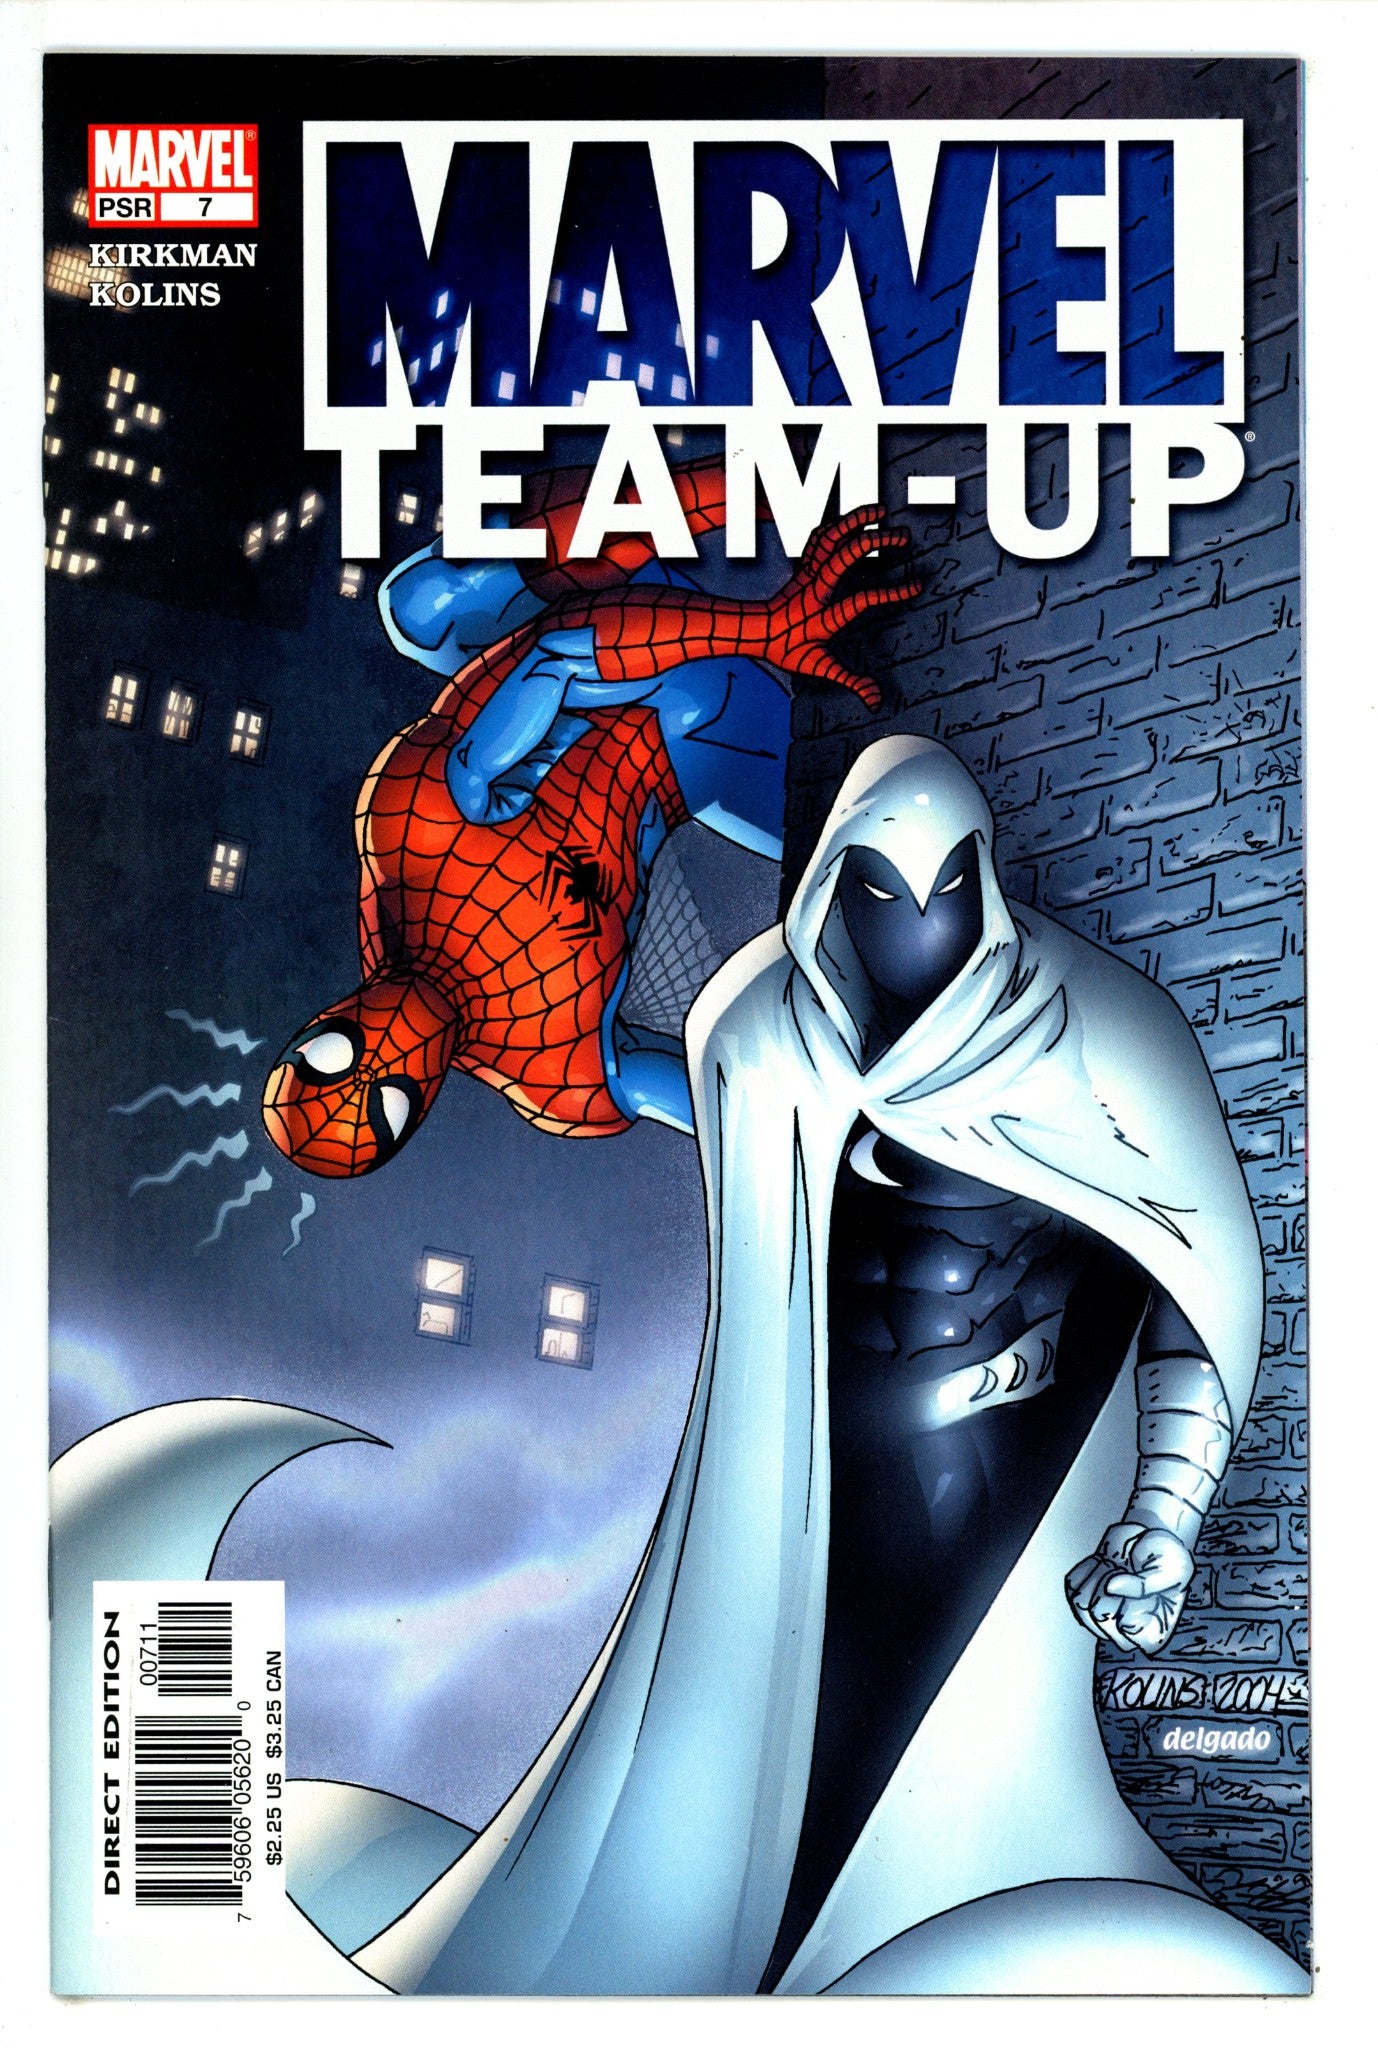 Marvel Team-Up Vol 3 7 VF/NM (9.0) (2005) 